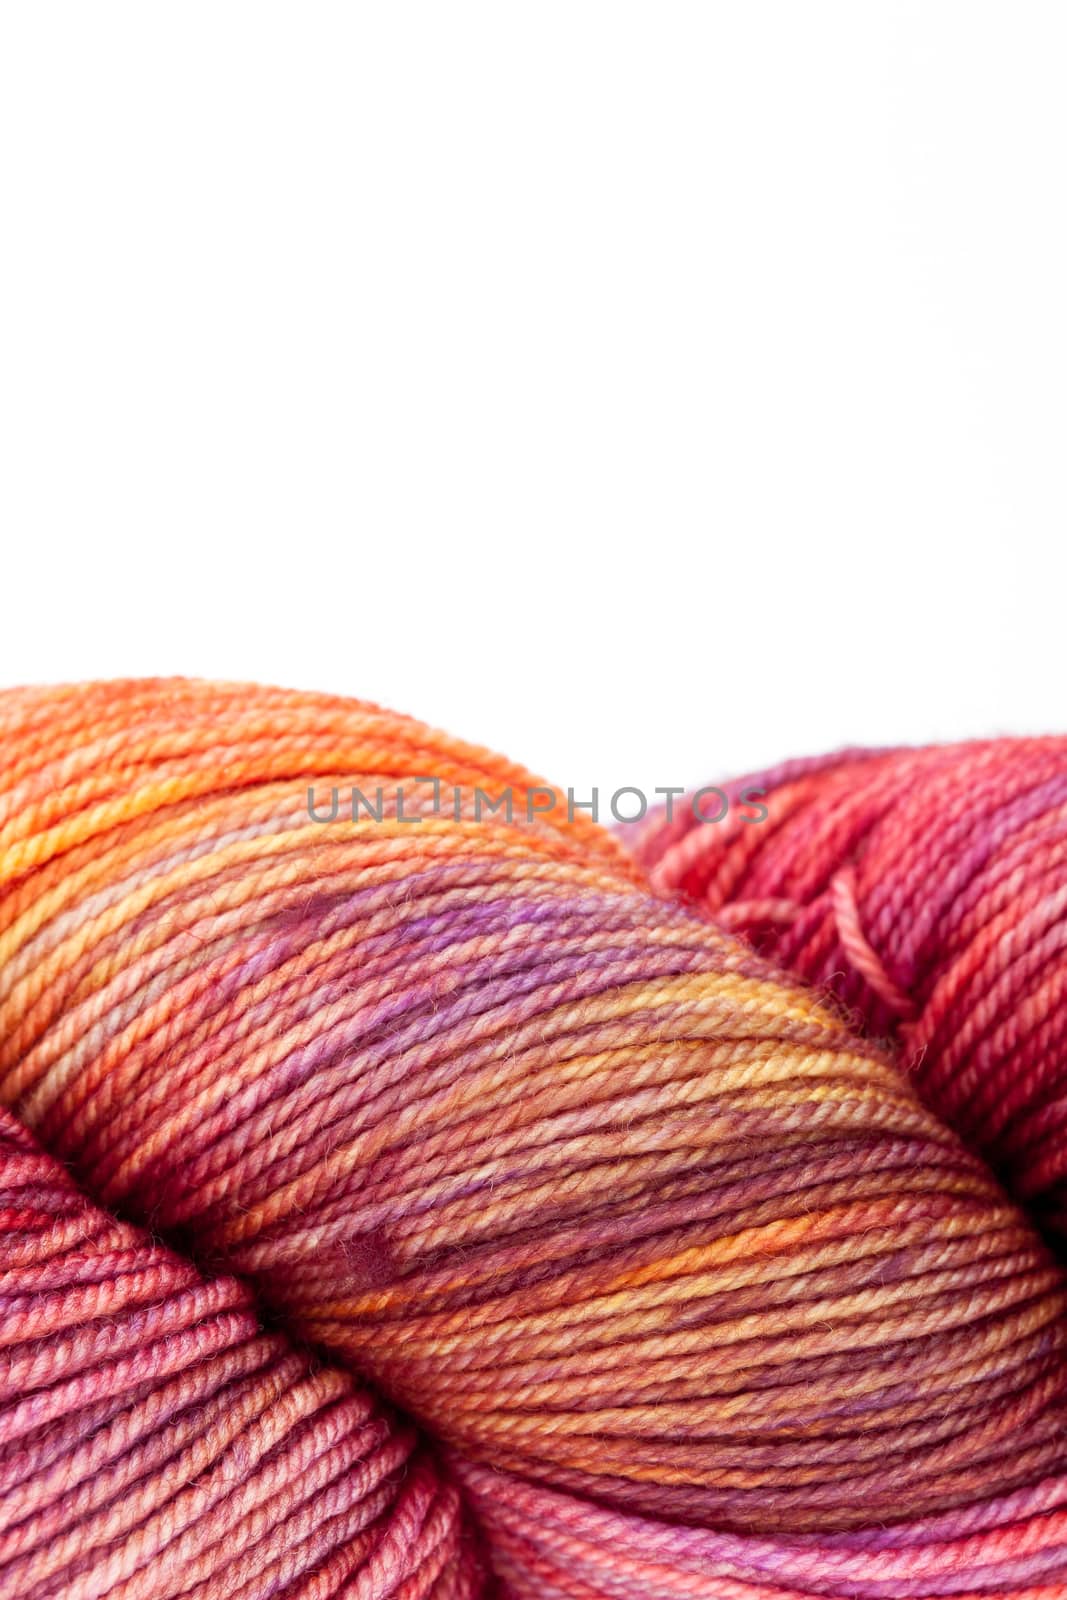 Set of colorful wool yarn balls. Closeup photo.